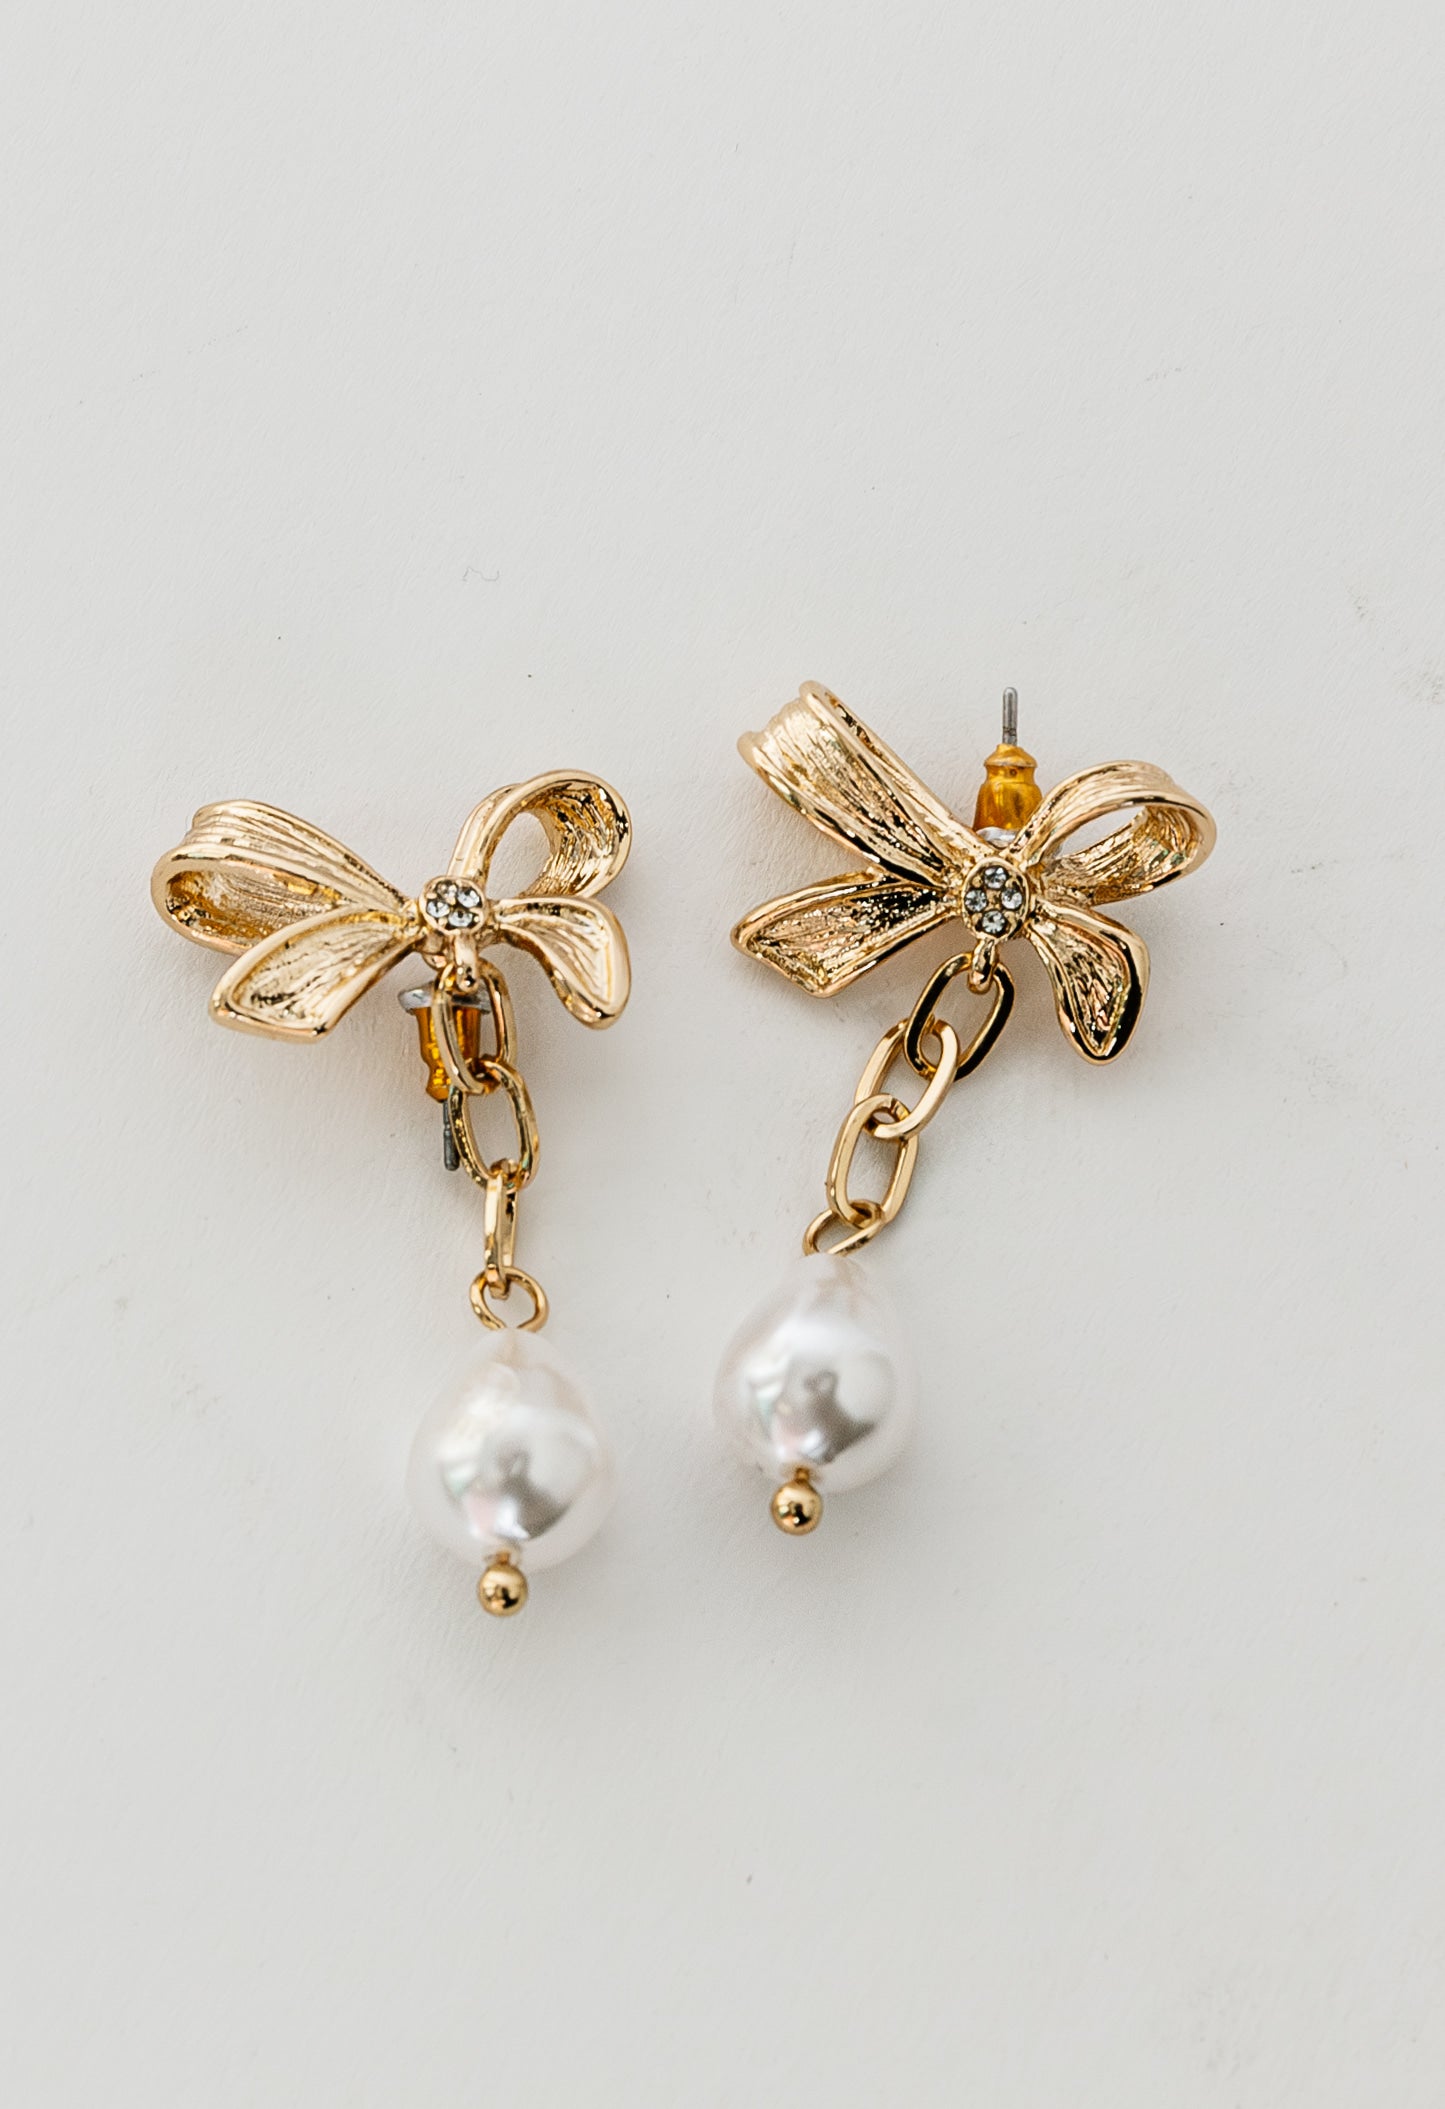 Darling Earrings - GOLD - willows clothing Earrings